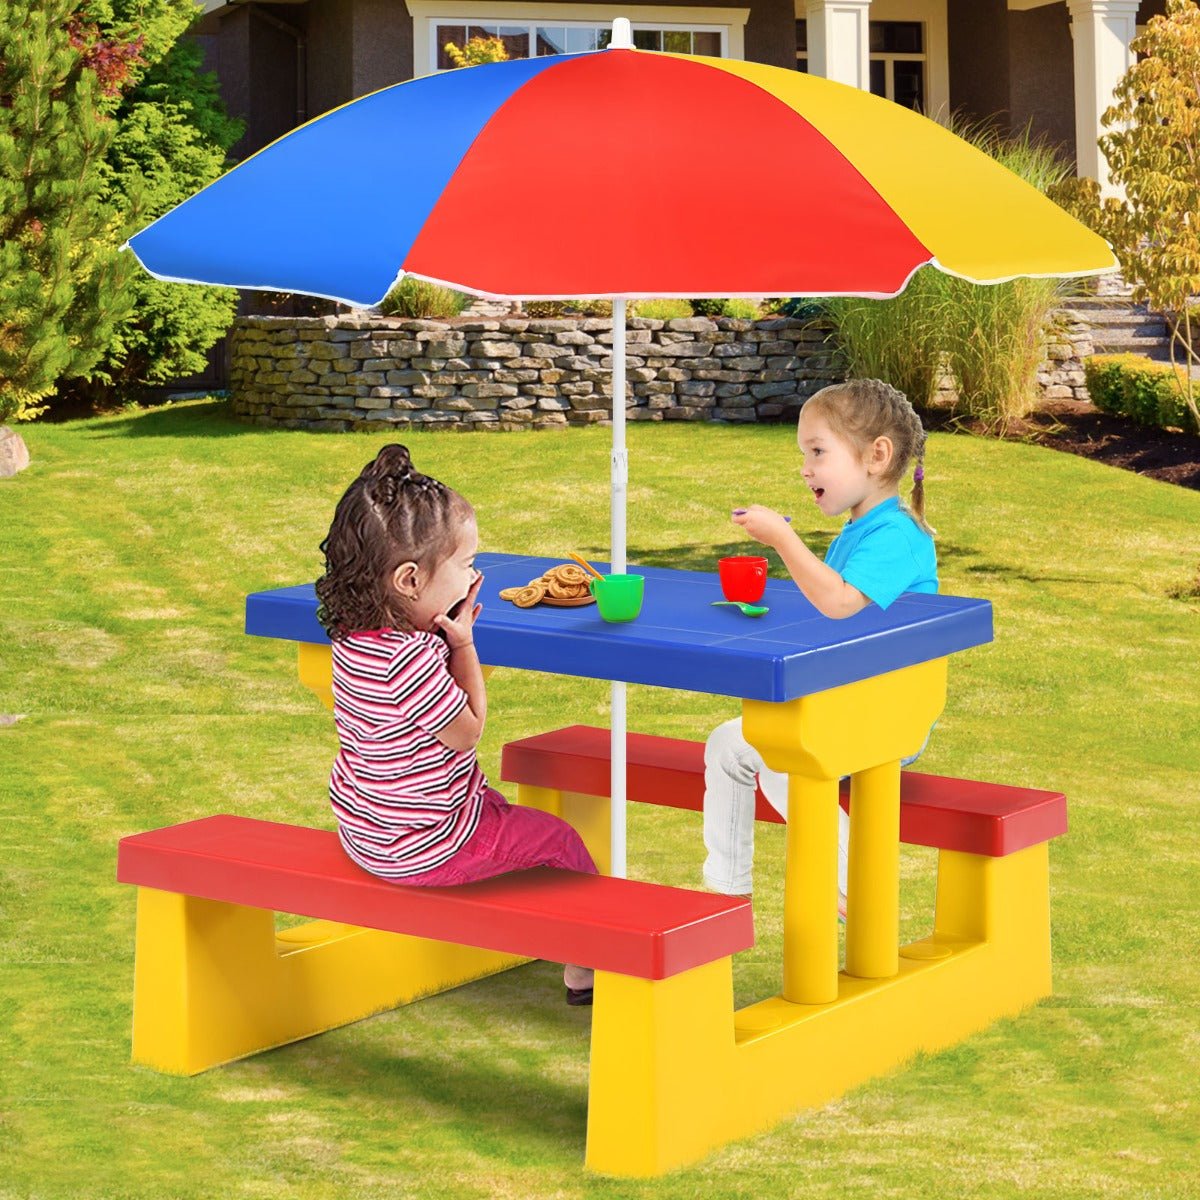 Kids colourful Picnic Delight: Removable Umbrella for Outdoor Fun